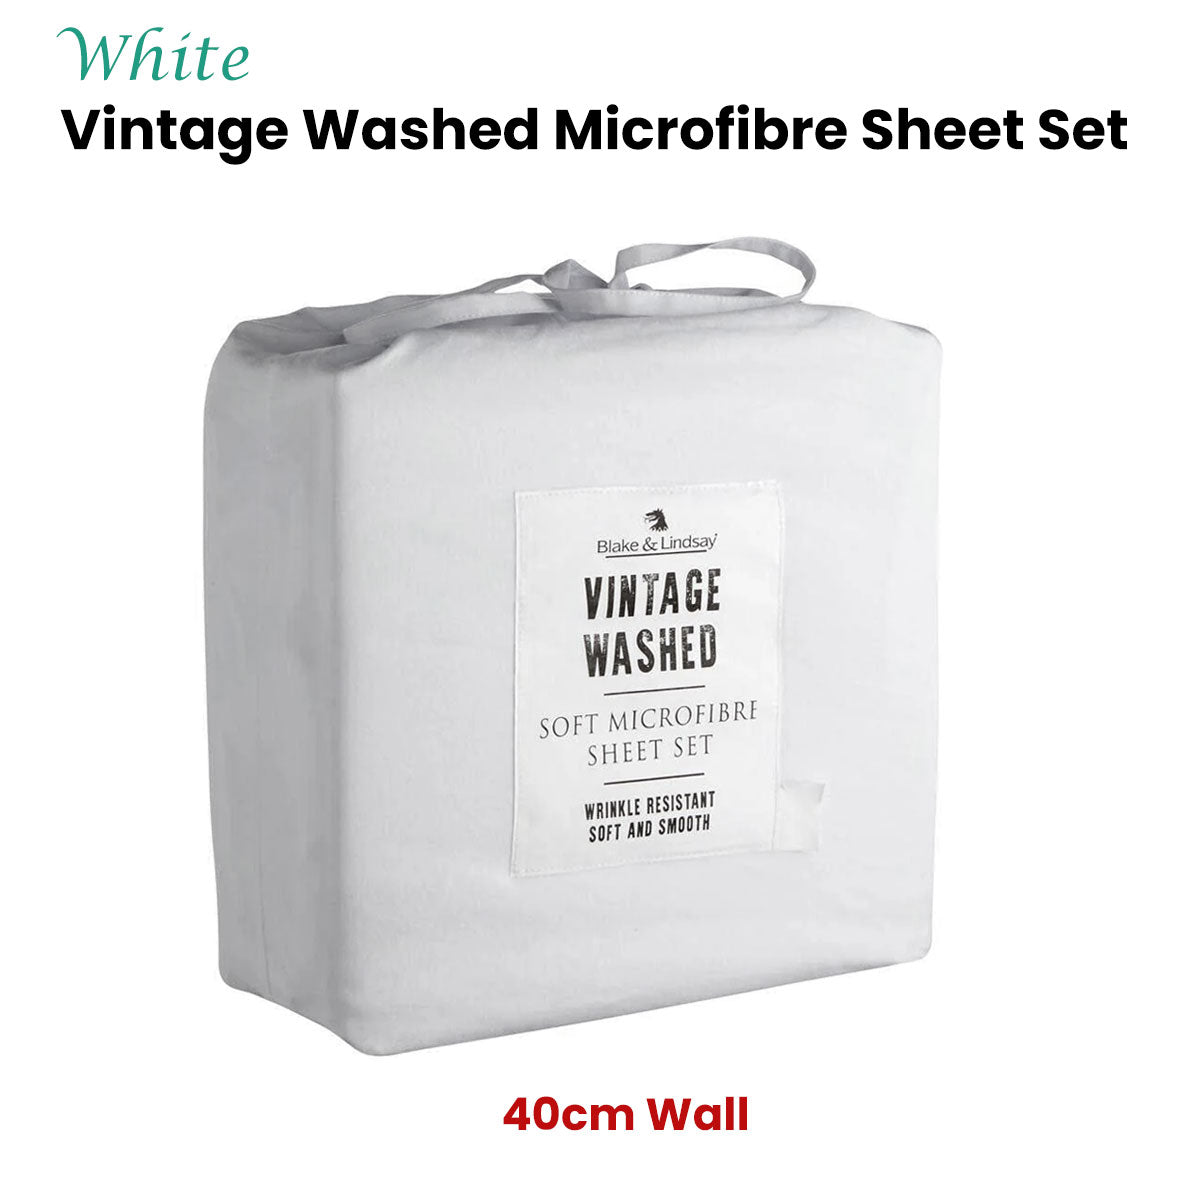 Blake & Lindsay White Vintage Washed Microfibre Sheet Set 40cm Wall Queen